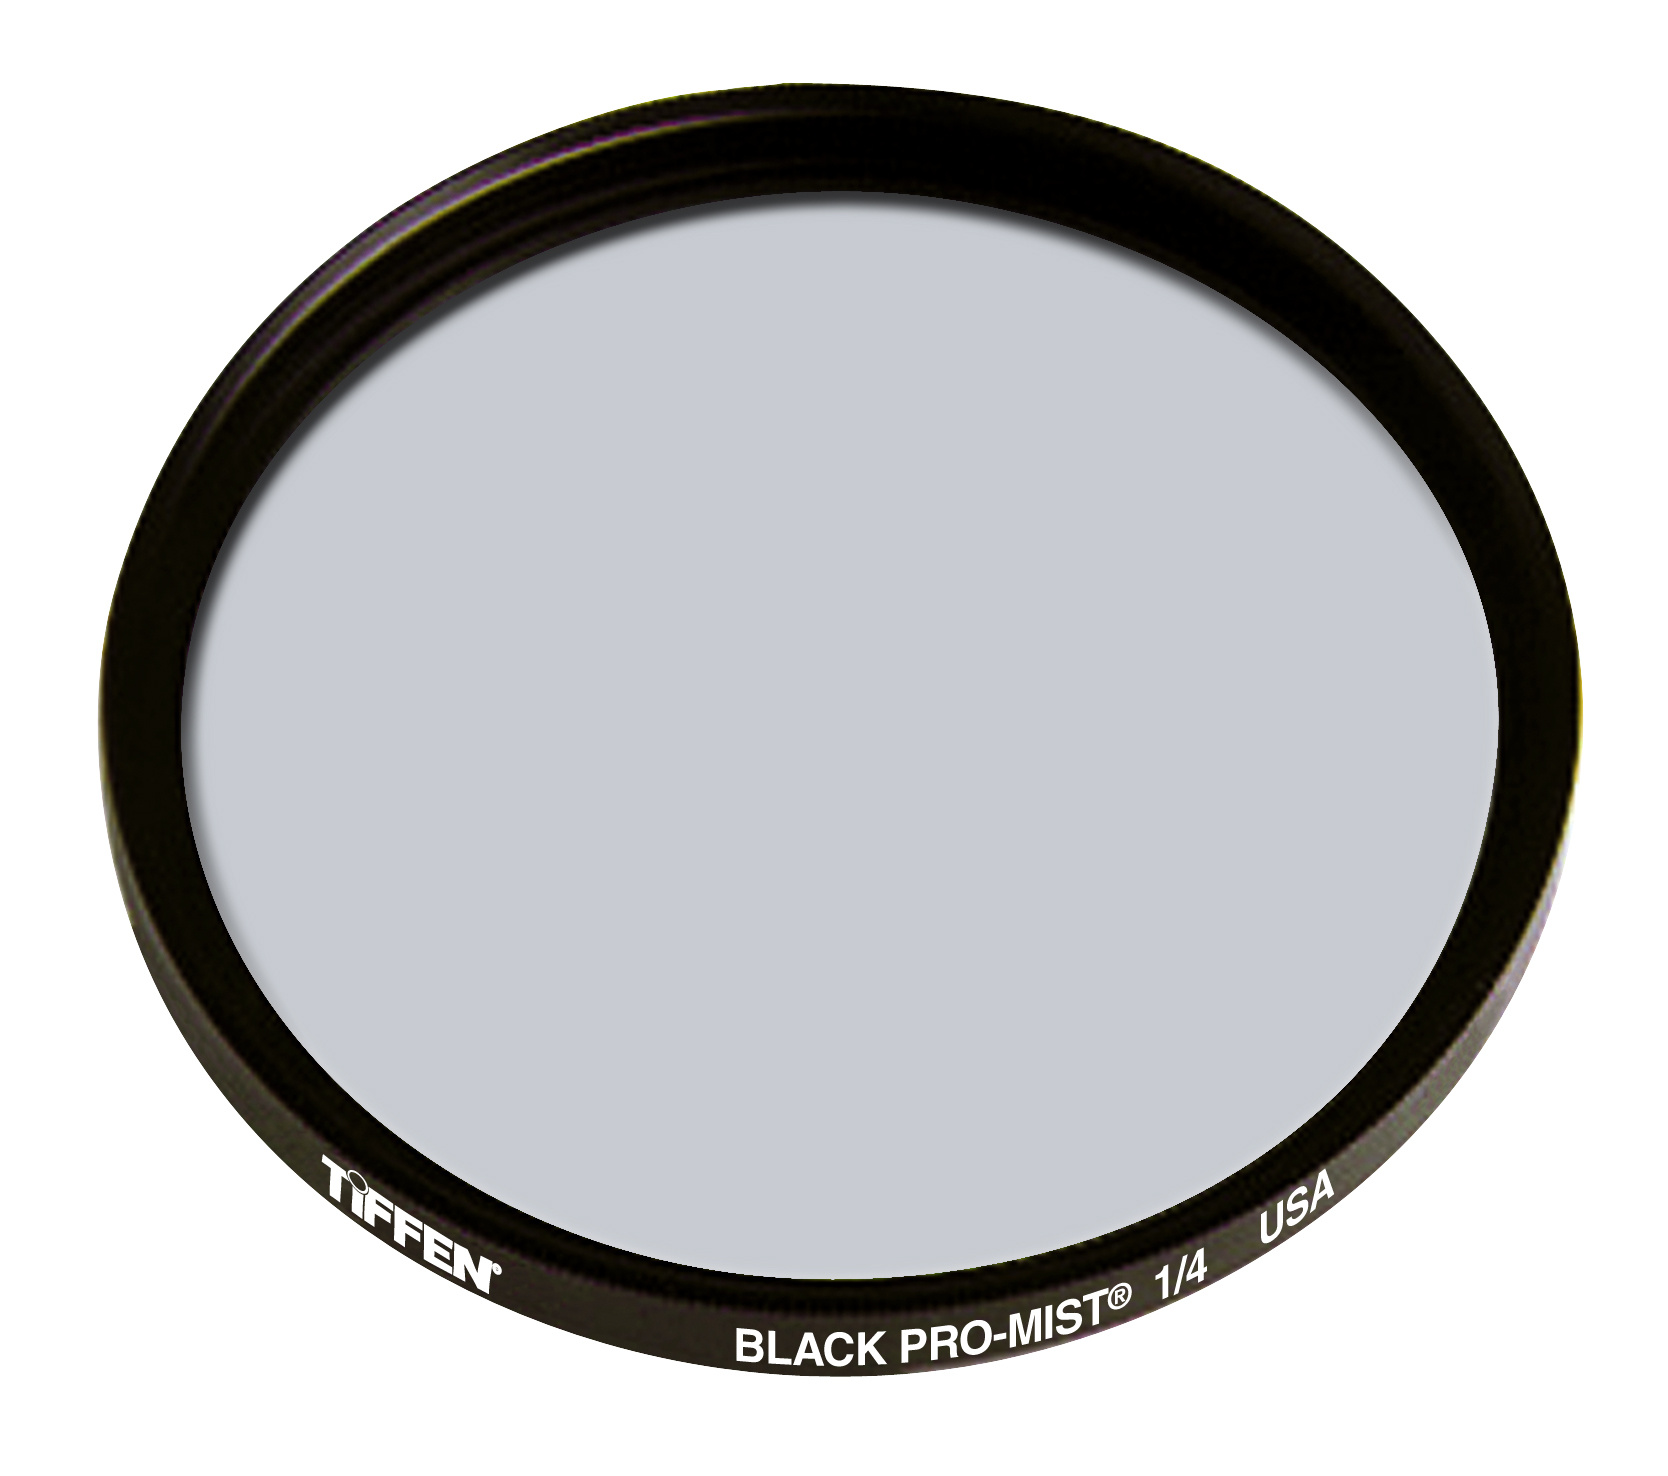 Tiffen 58mm Black Pro-Mist 1/4 Filter